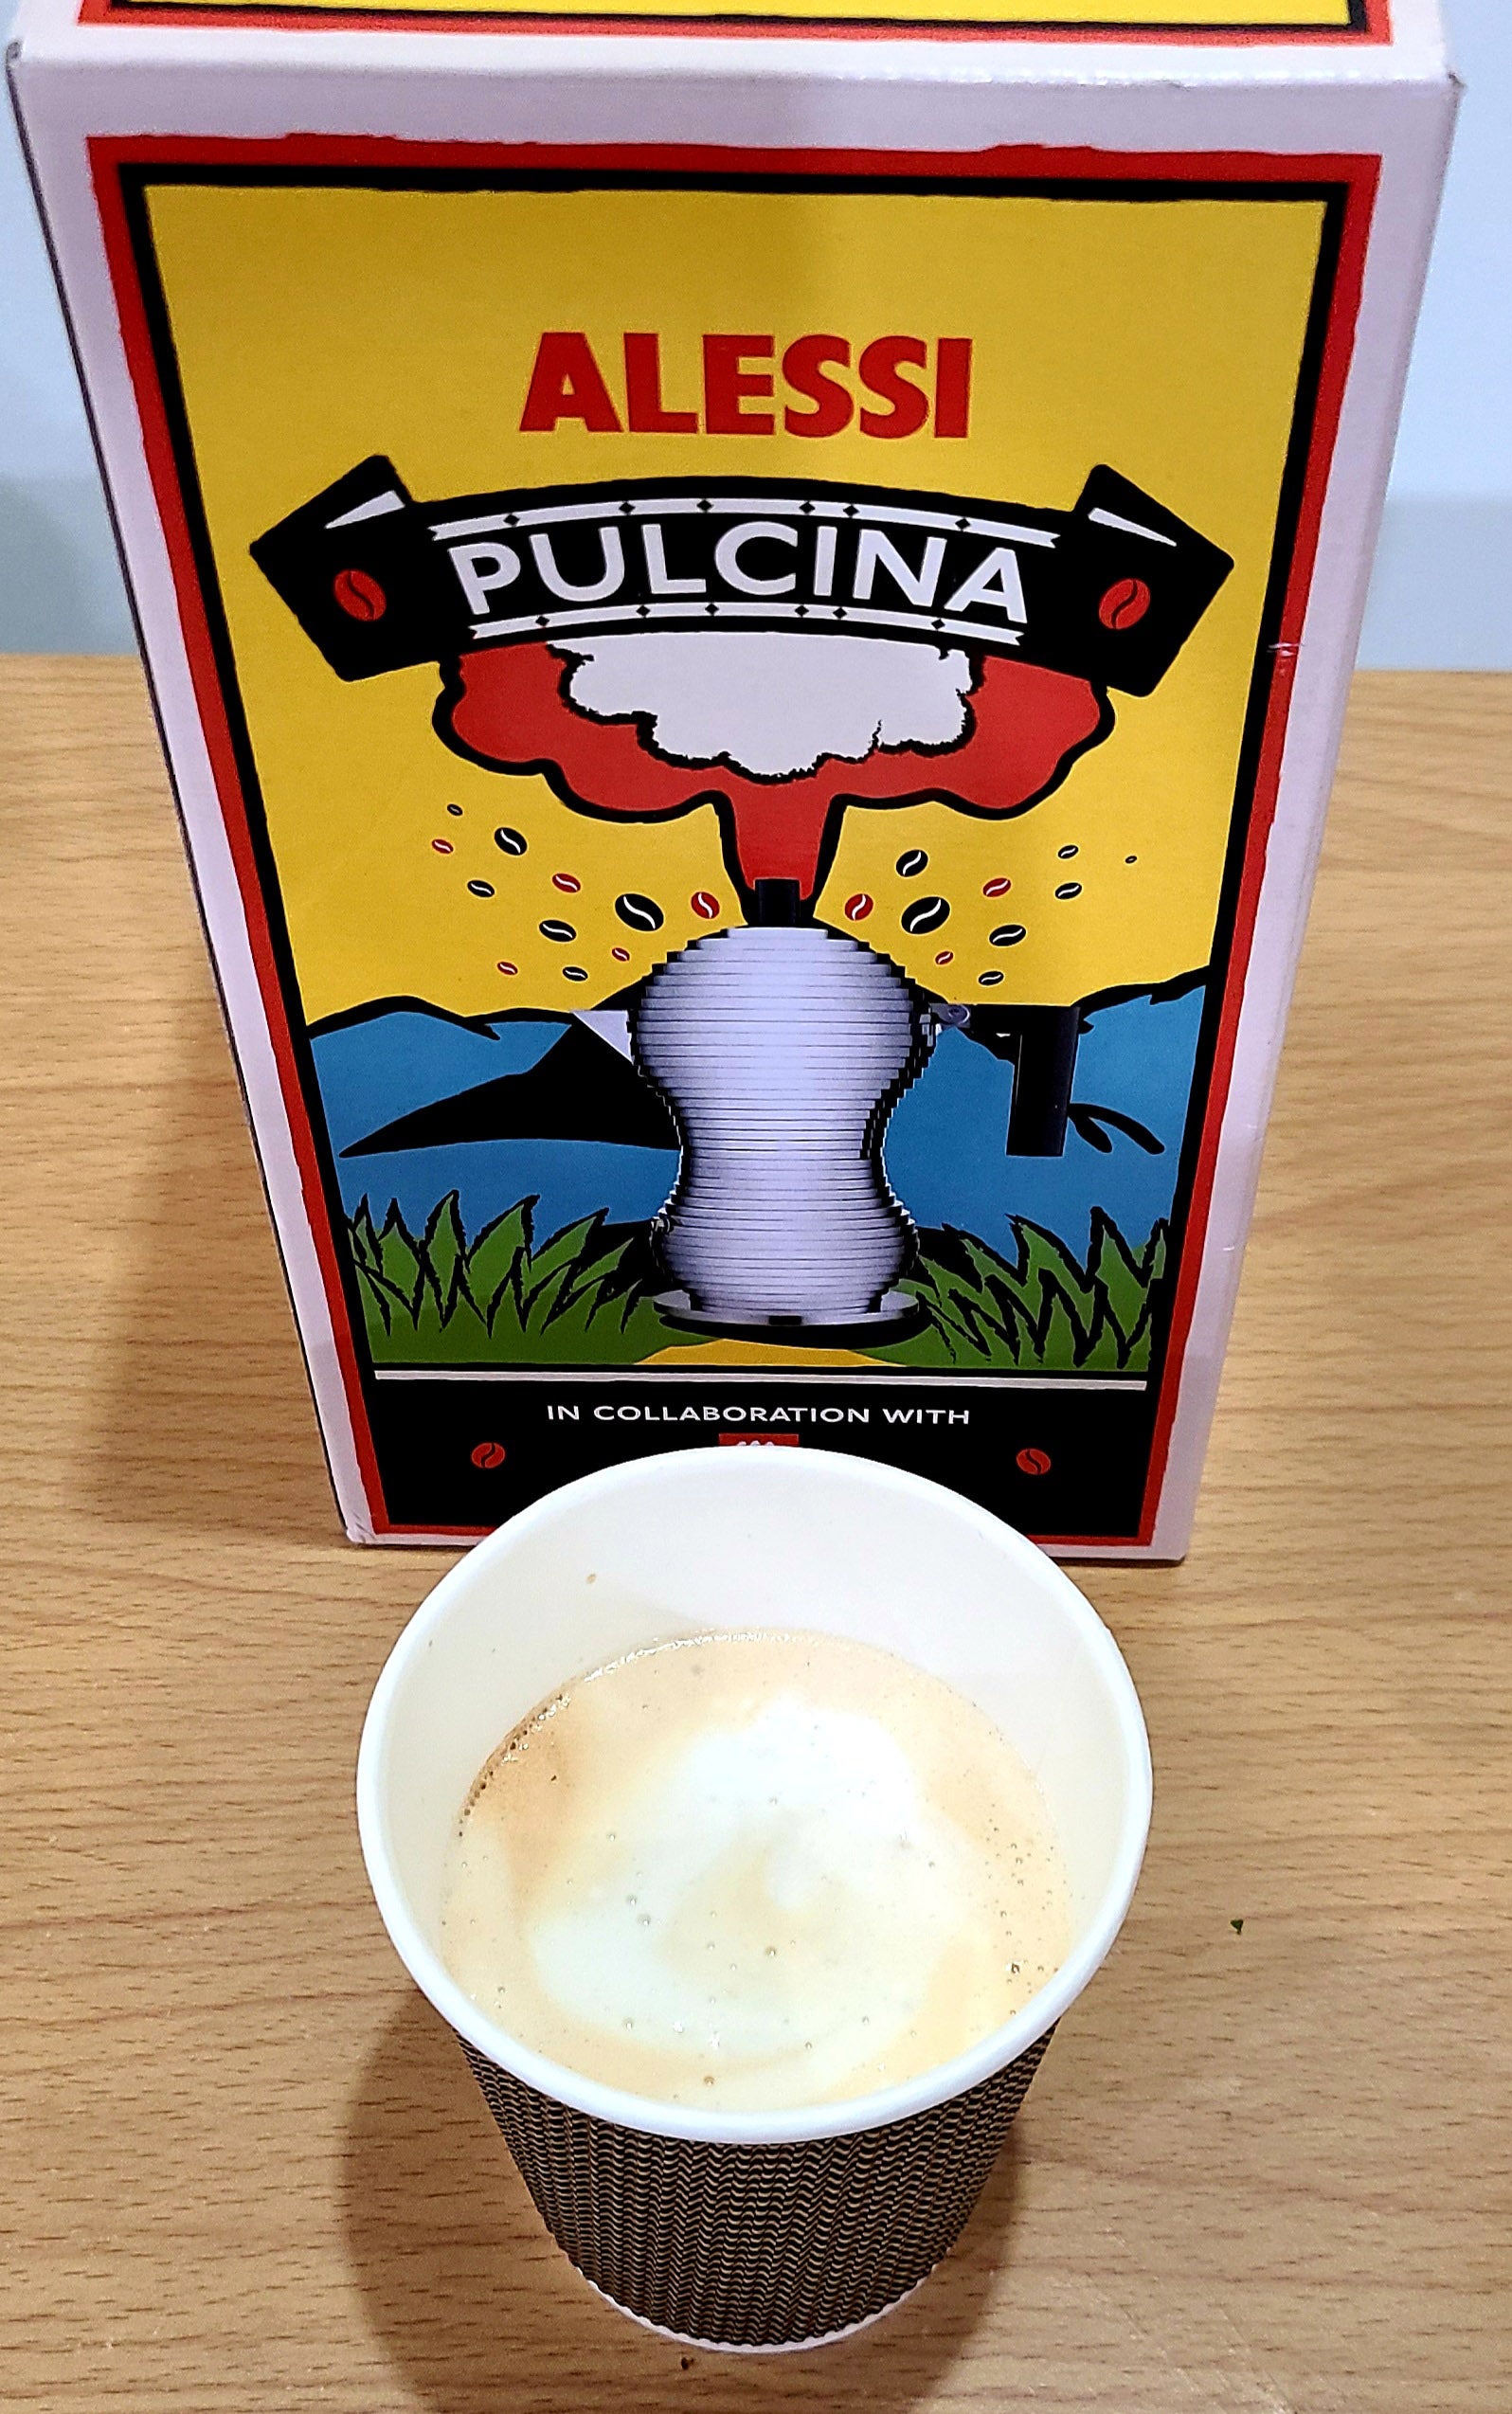 Alessi Pulcina Espresso Coffee Maker